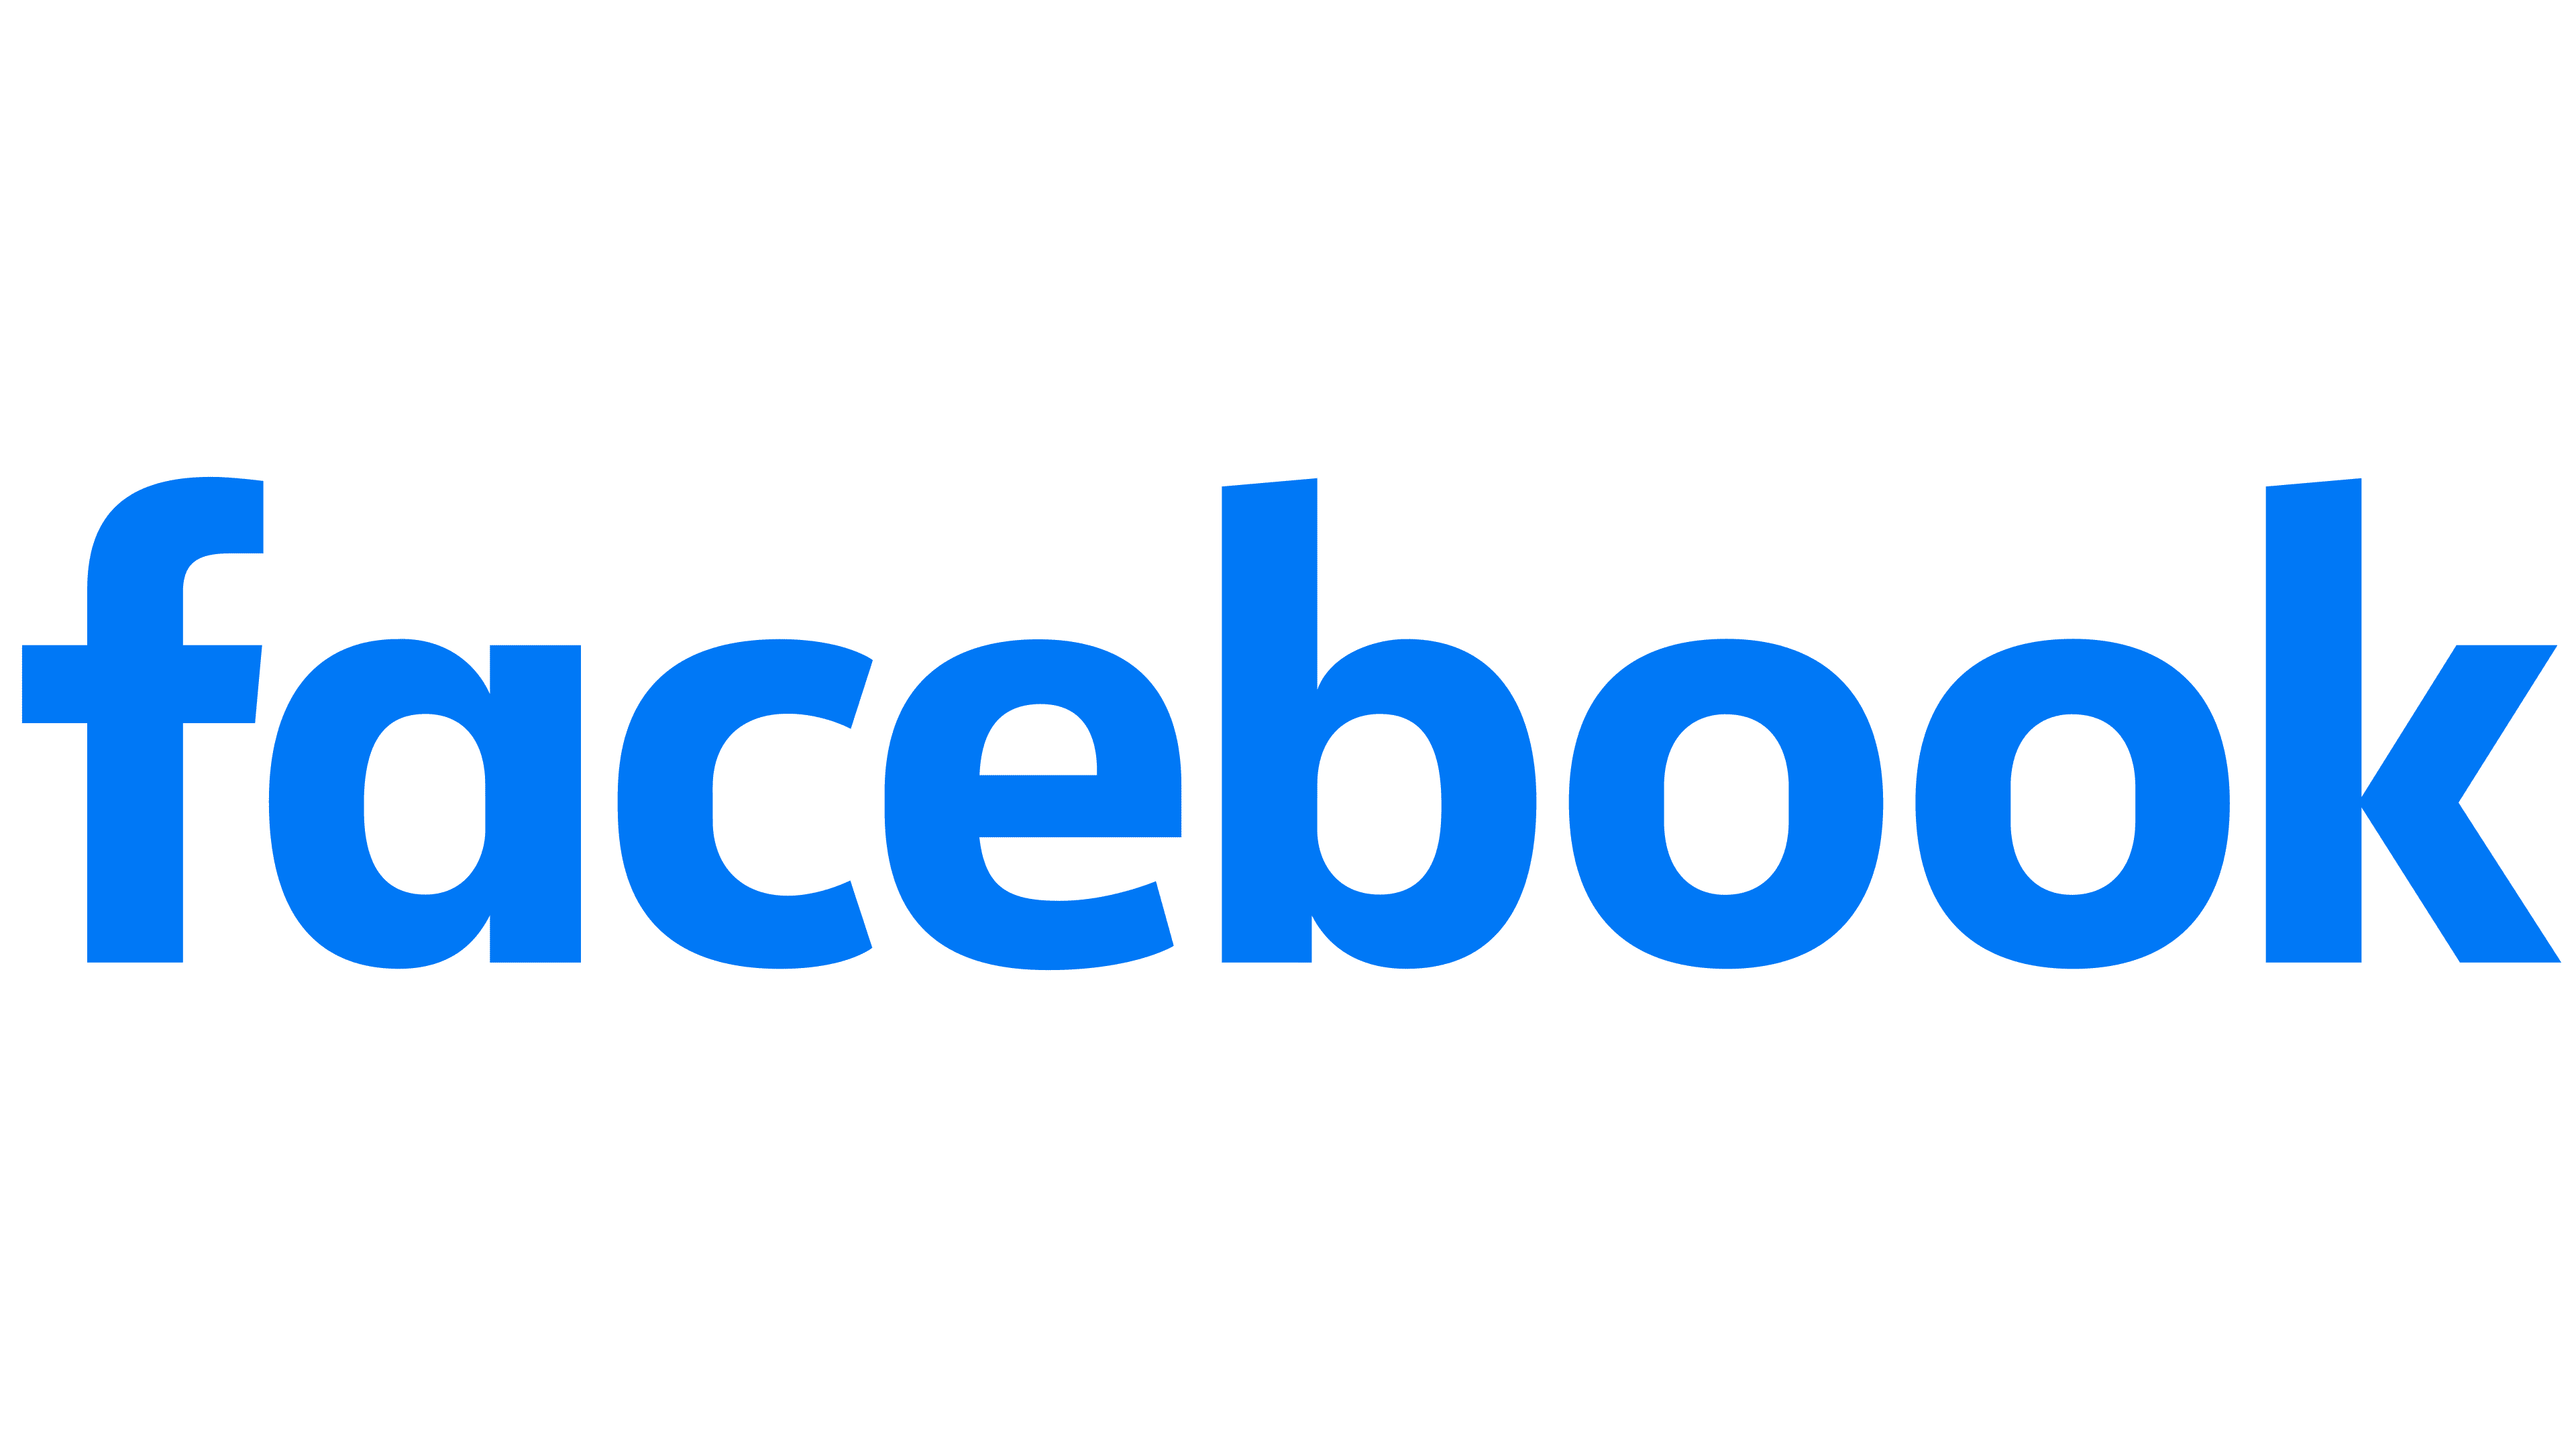 Facebook-Logo copy